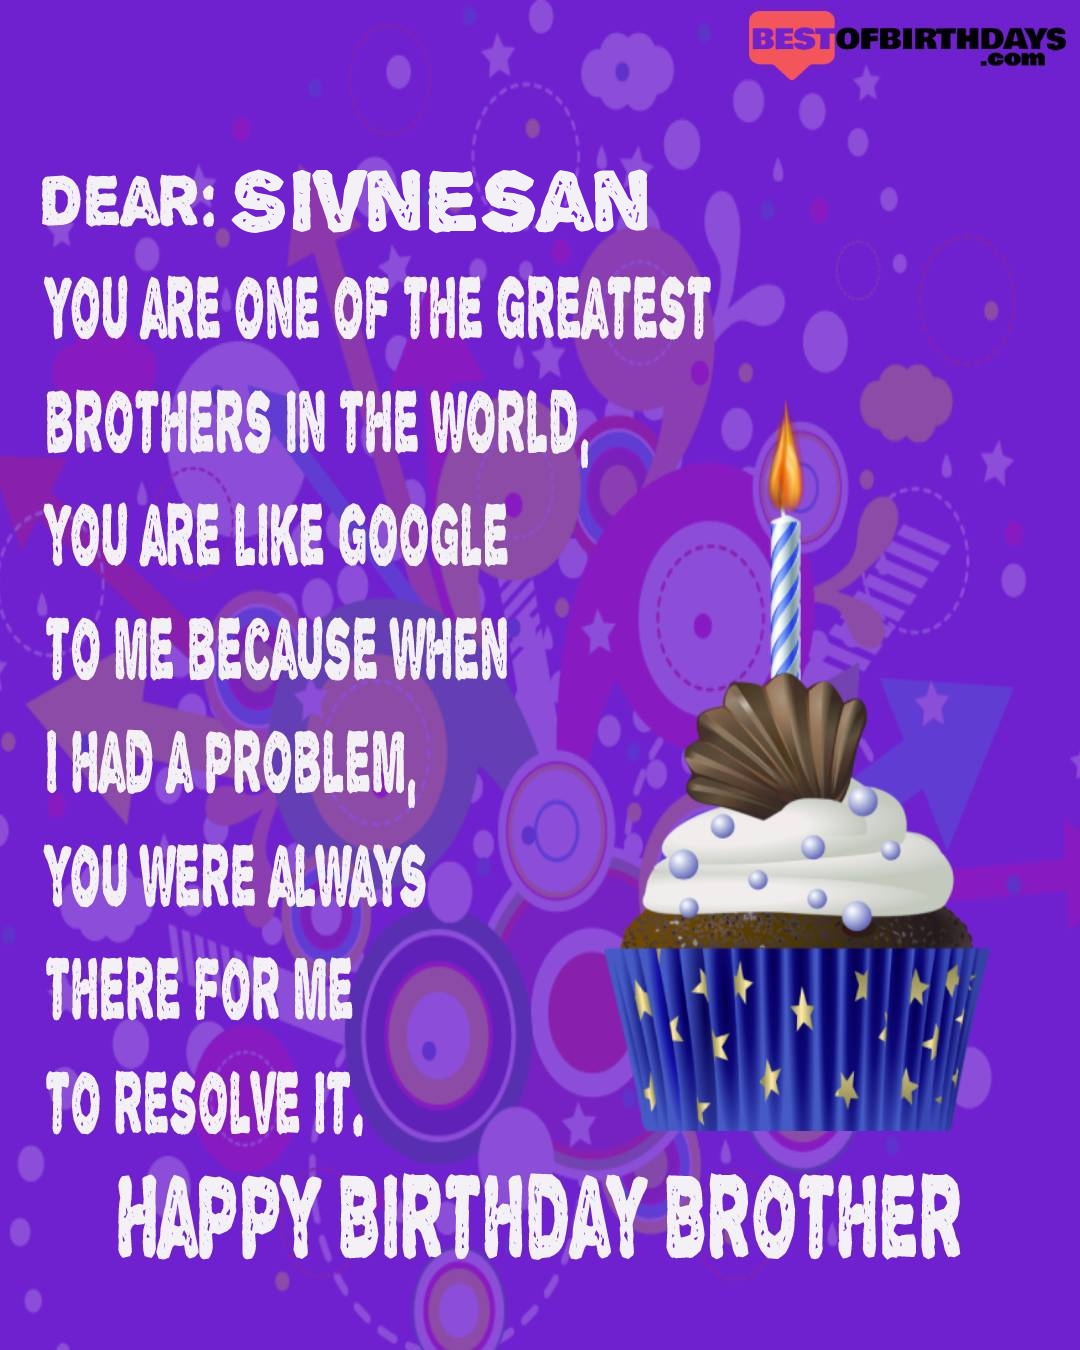 Happy birthday sivnesan bhai brother bro